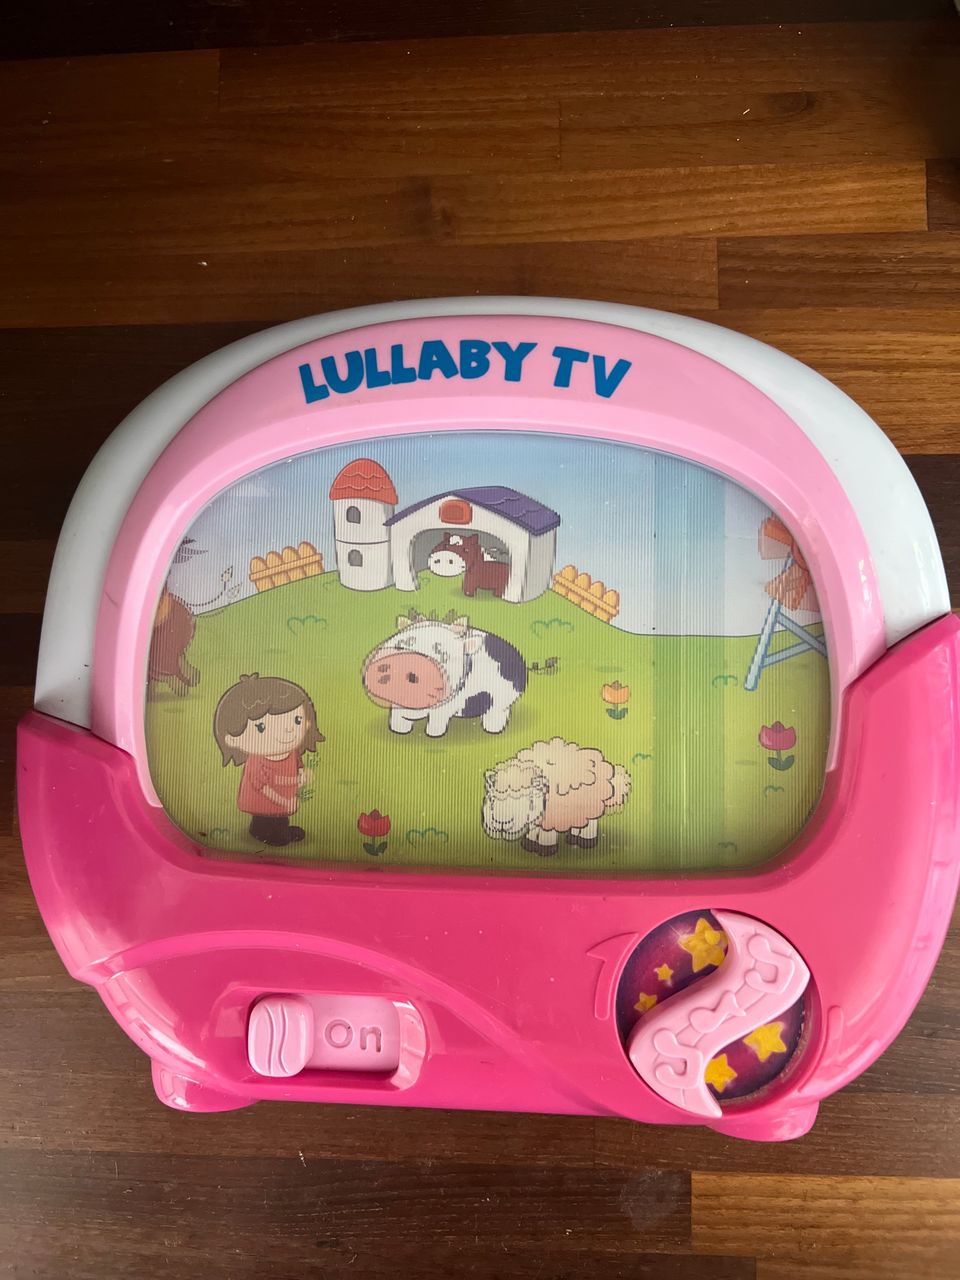 Lullaby TV